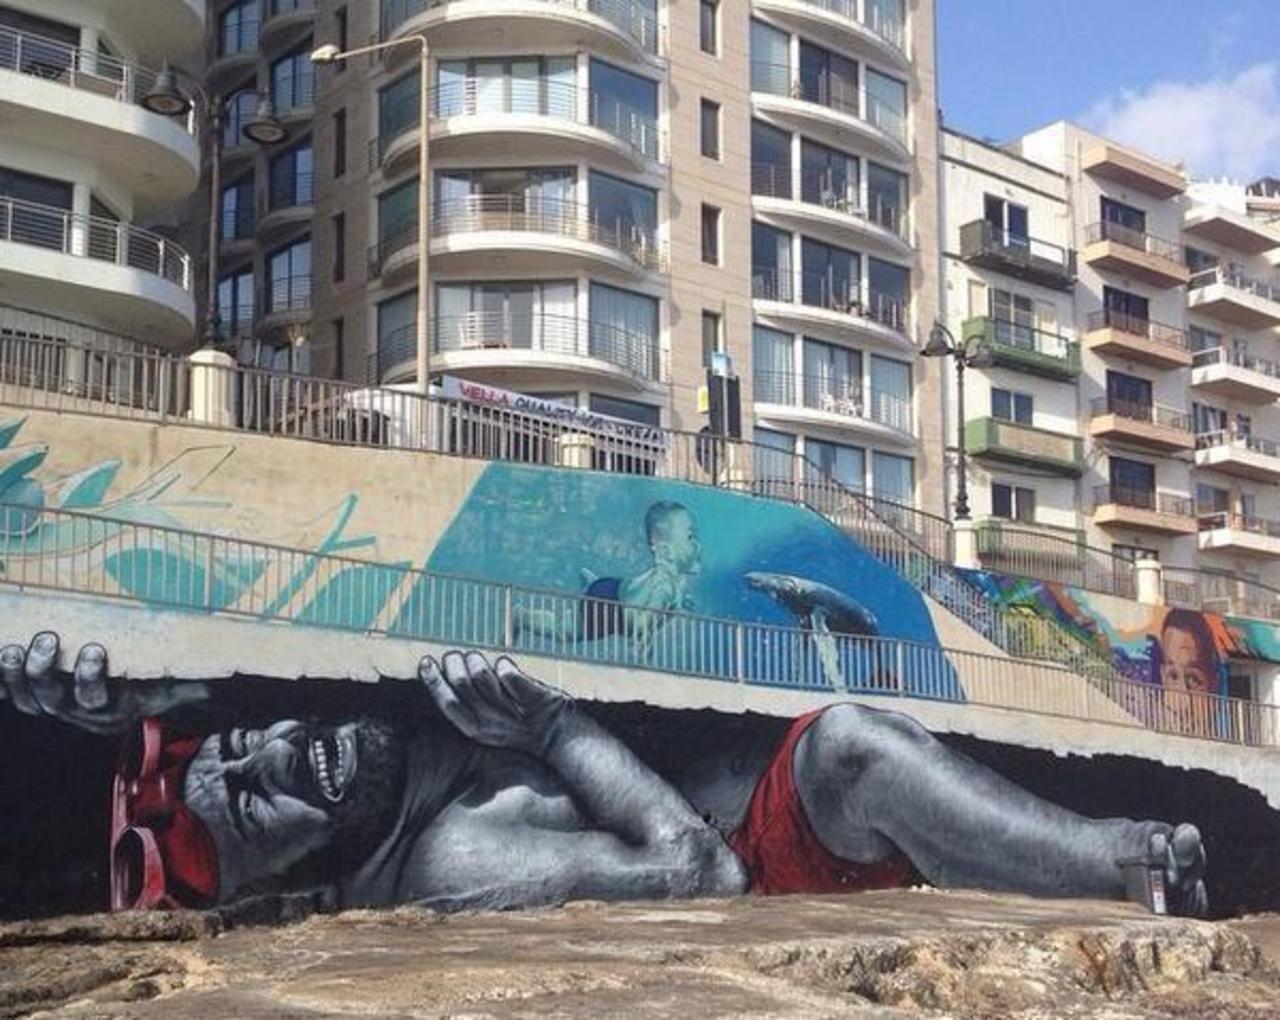 #MTO hyperrealistic #streetart in #Sliema #Malta #switch #graffiti #bedifferent #art #arte http://t.co/jiF6fHqQ2h